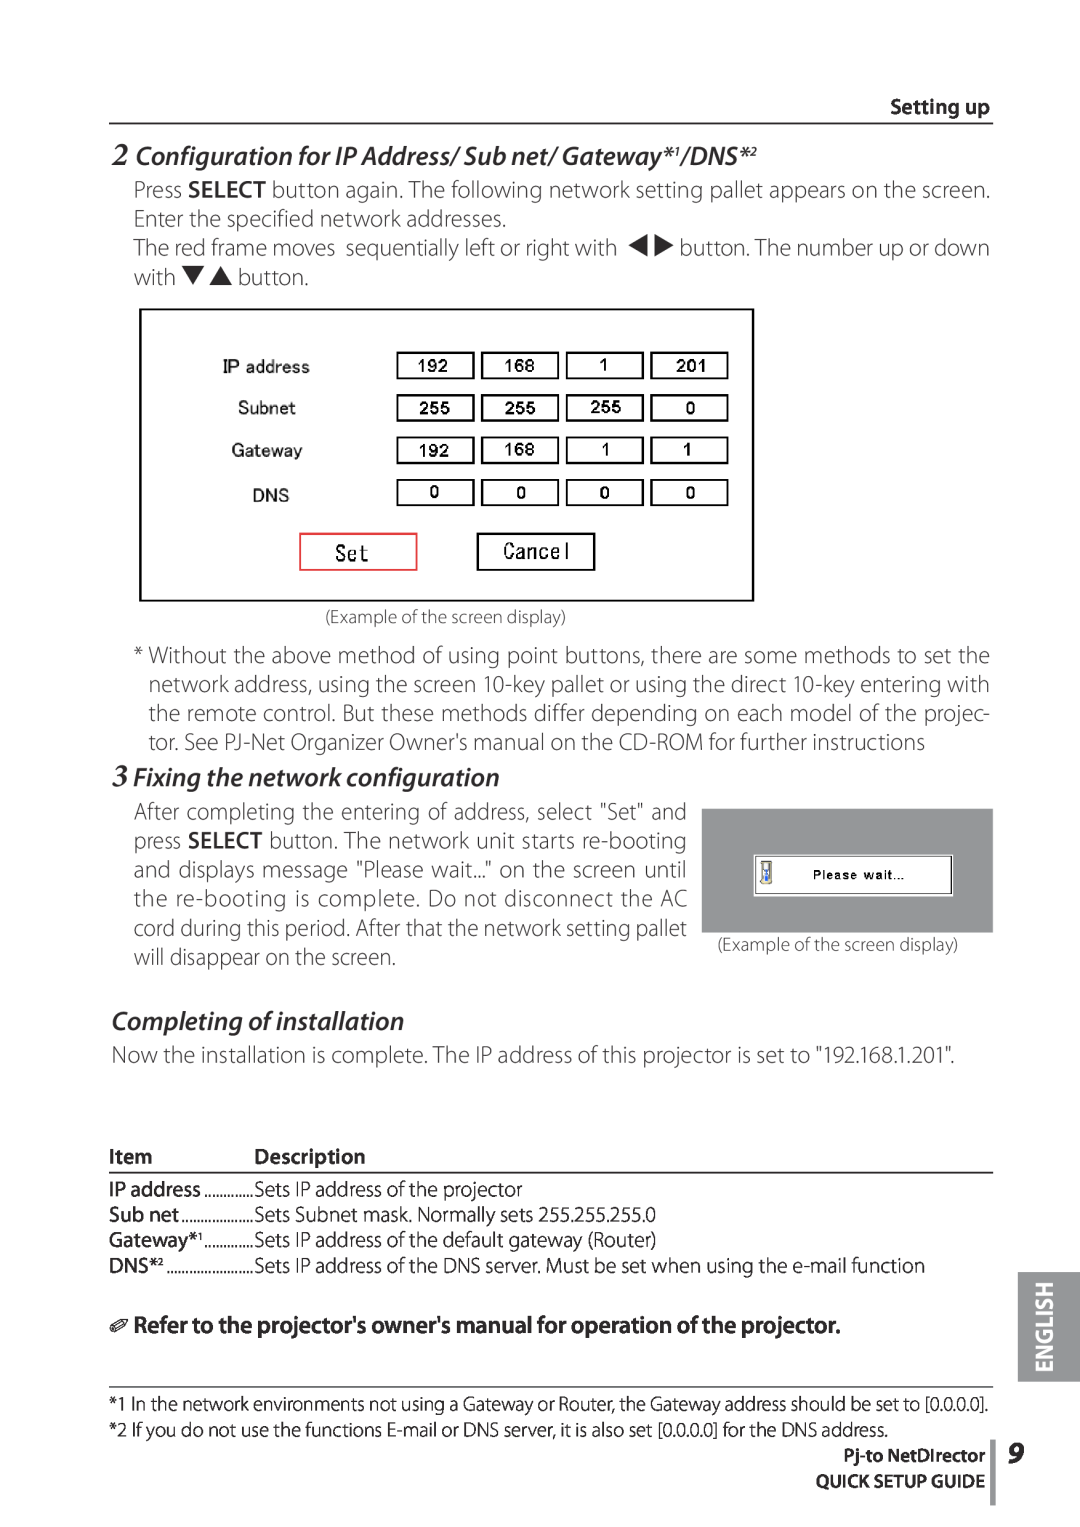 Eiki PJNET-30 setup guide Configuration for IP Address/ Sub net/ Gateway*1/DNS*2, Fixing the network configuration 